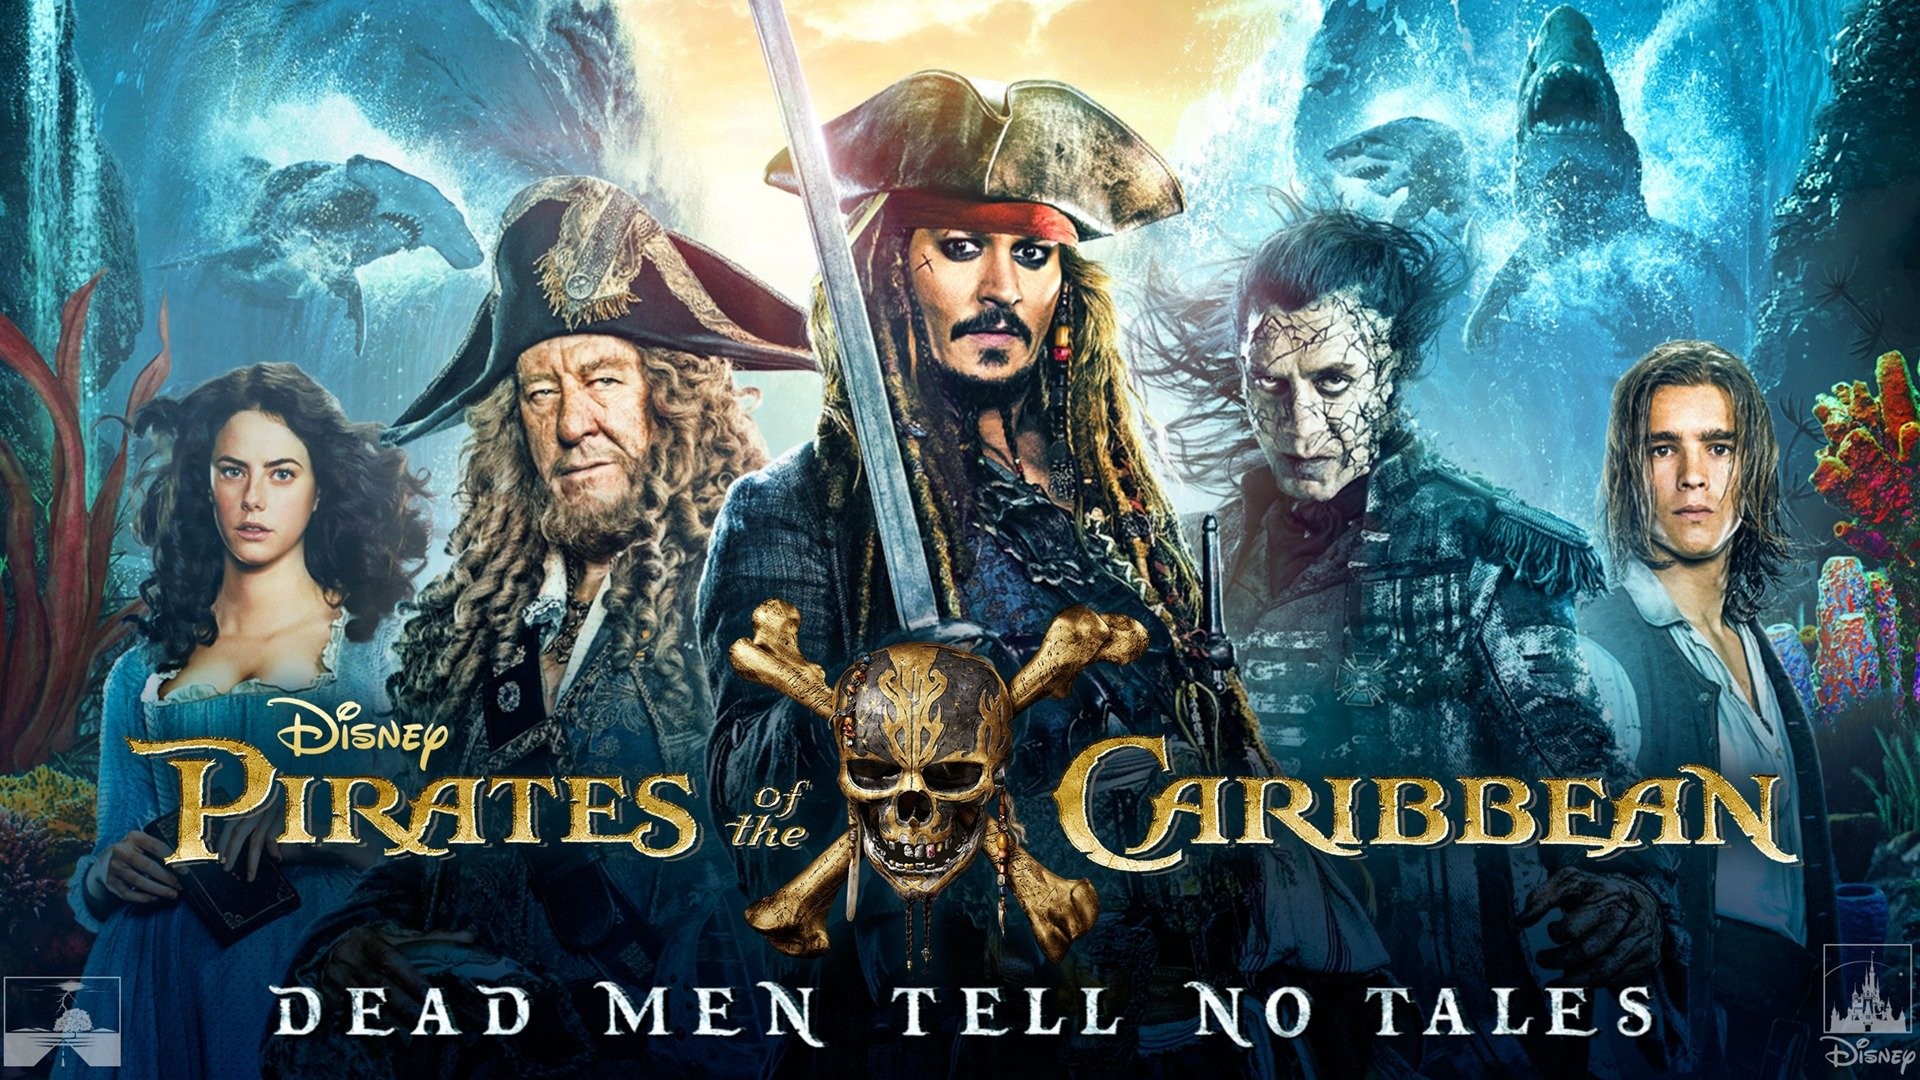 Pirates of the Caribbean: Dead Men Tell No Tales (2017) - IMDb